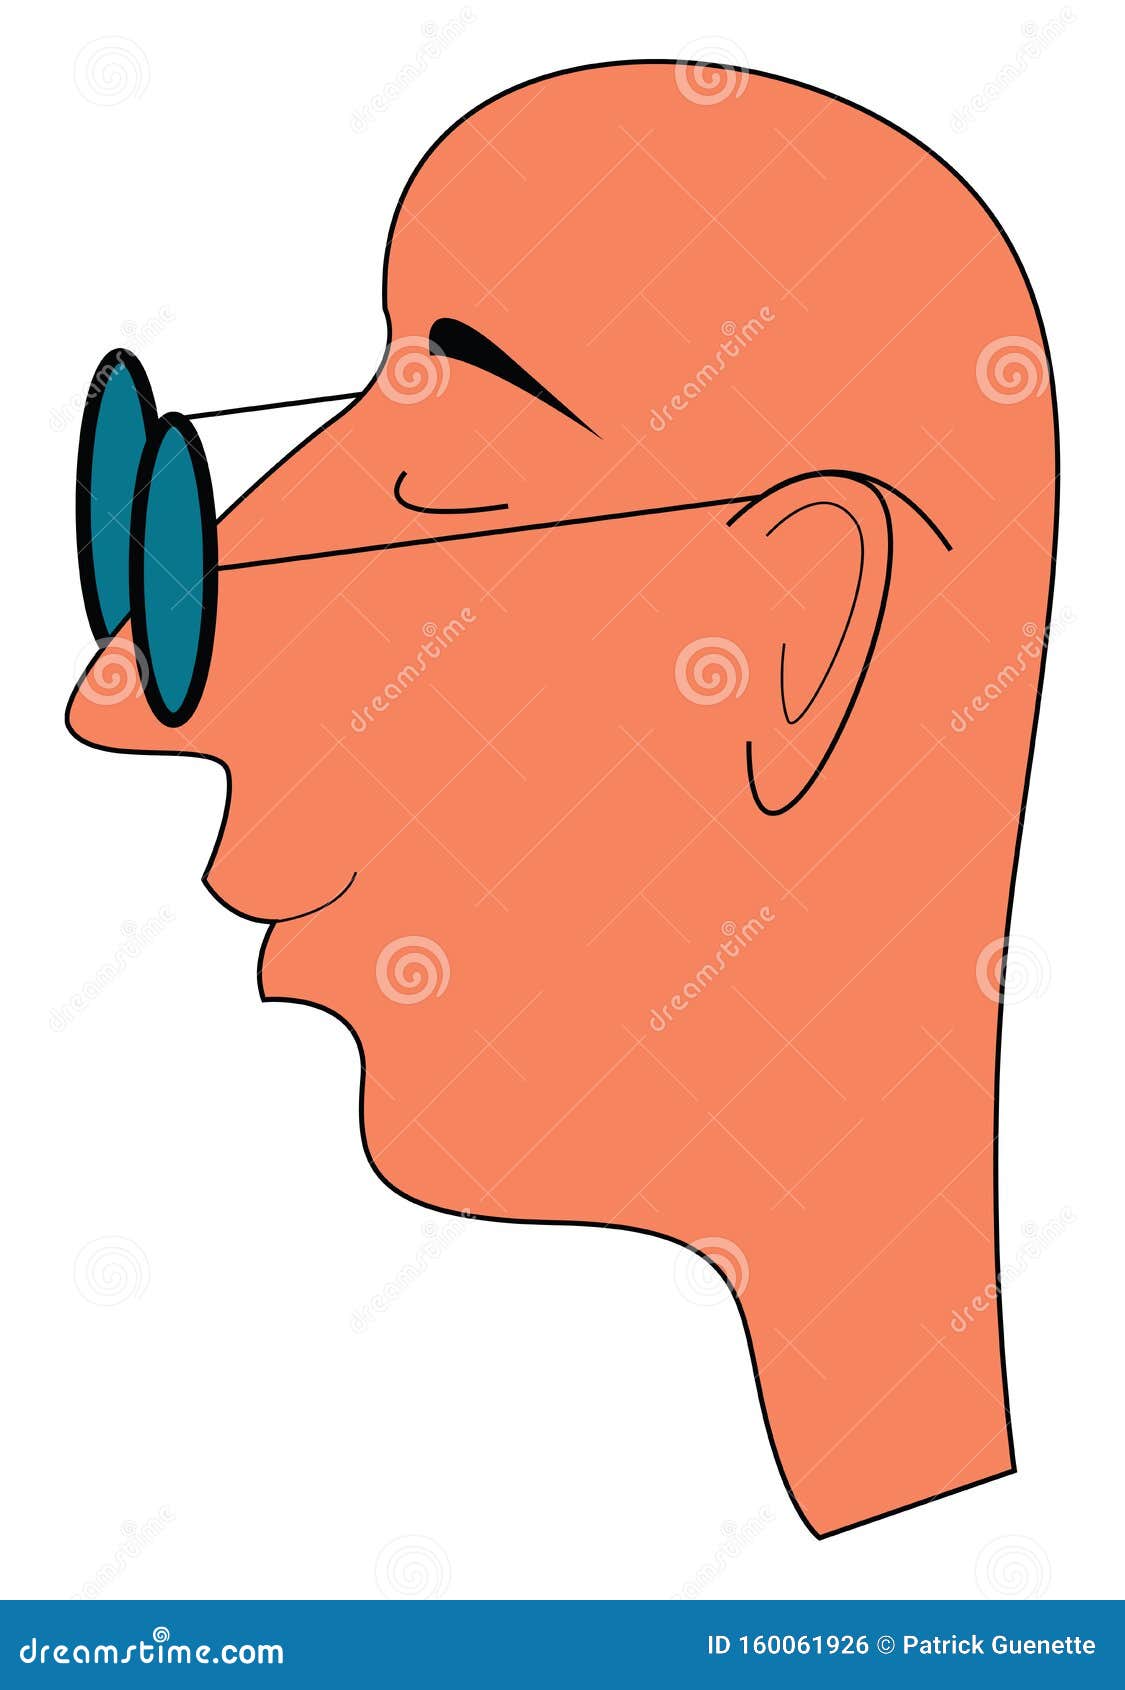 Cartoon Bald Man With Glasses Vector Illustration Stock Vector